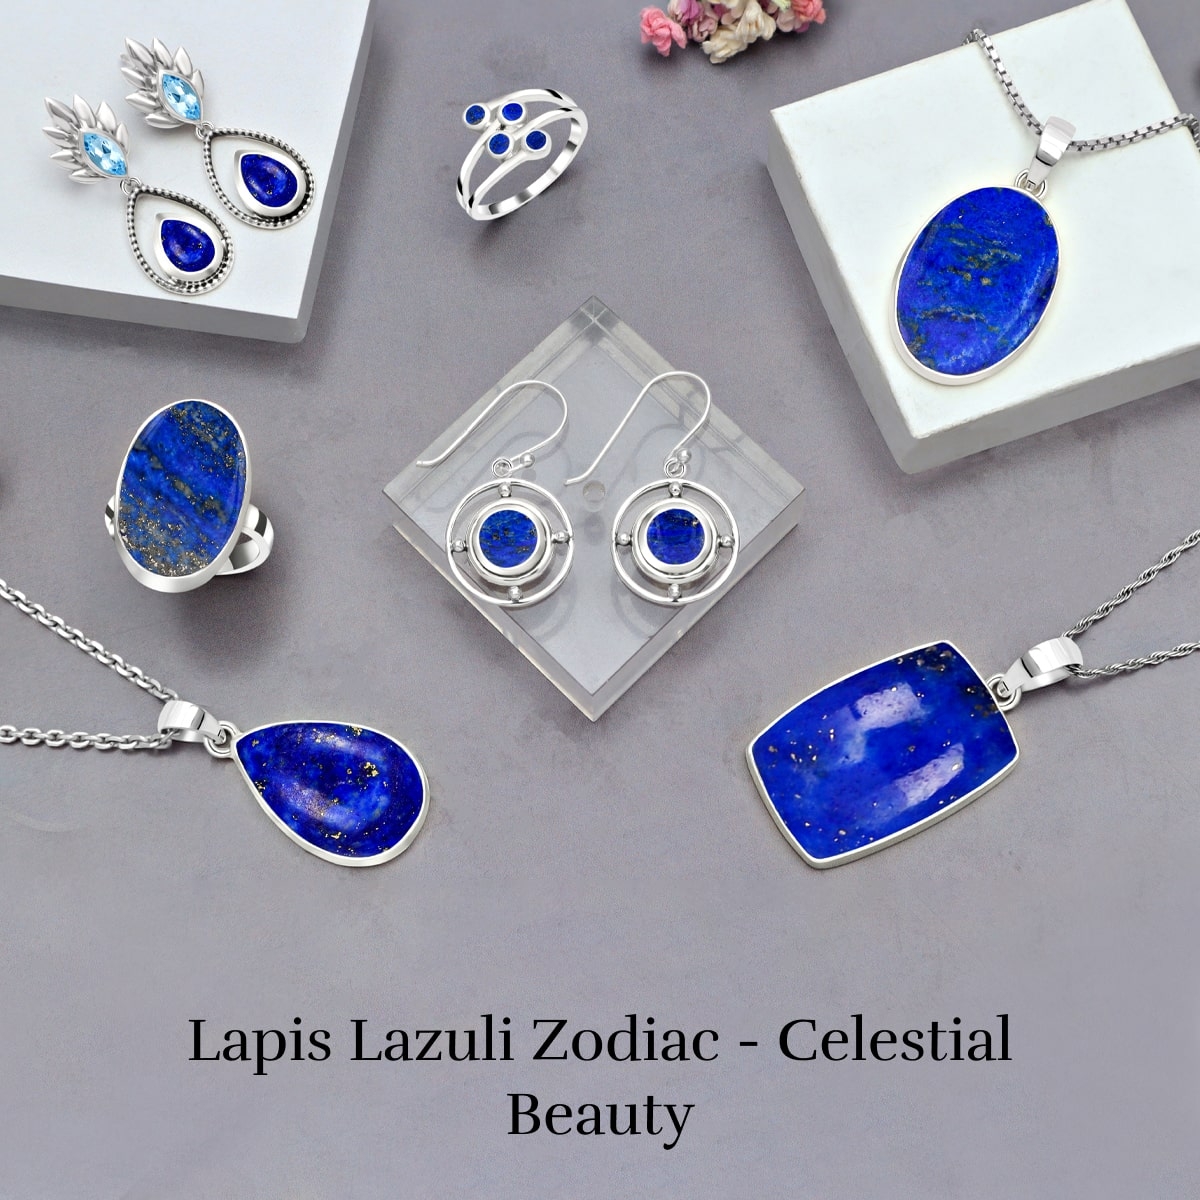 Zodiac sign of Lapis Lazuli